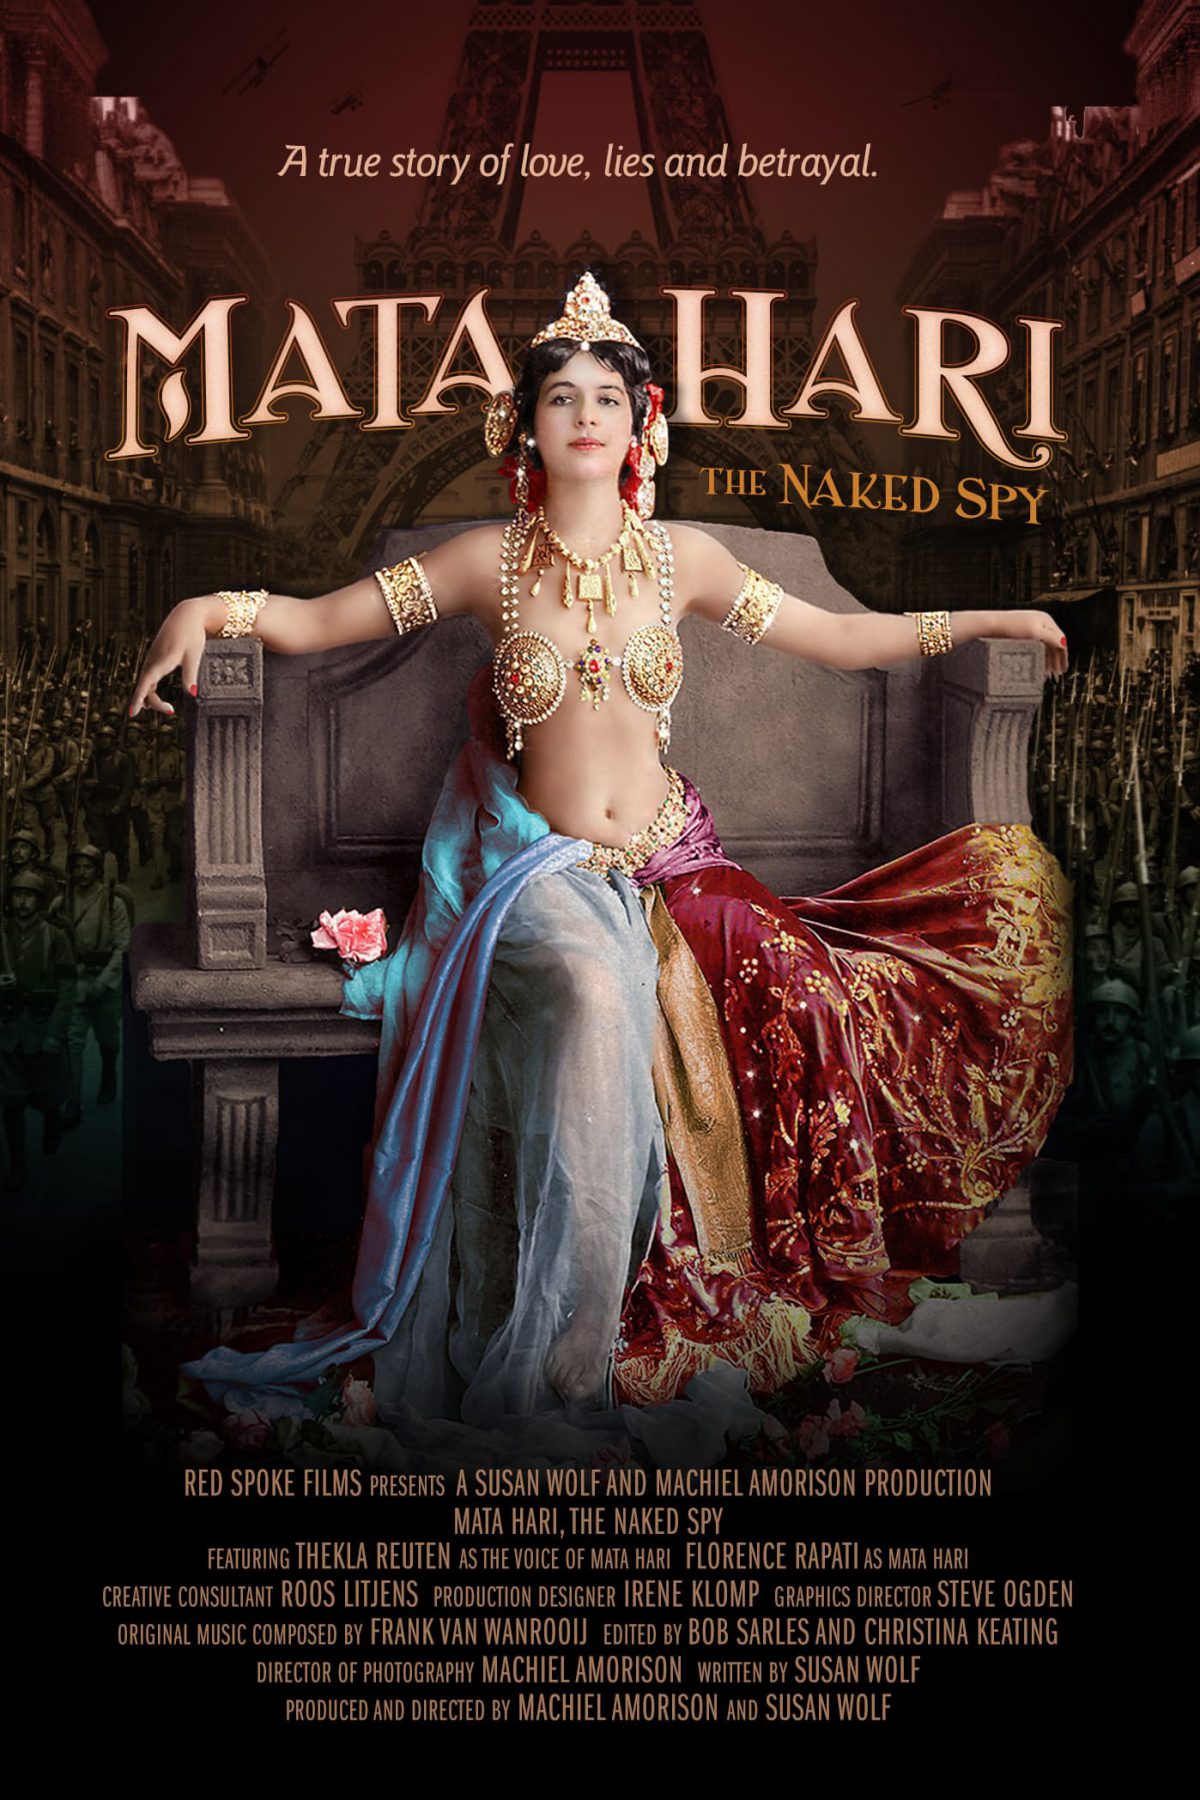 World Premiere of “Mata Hari –The Naked Spy” on Feb. 9 at Santa Fe Film Festival